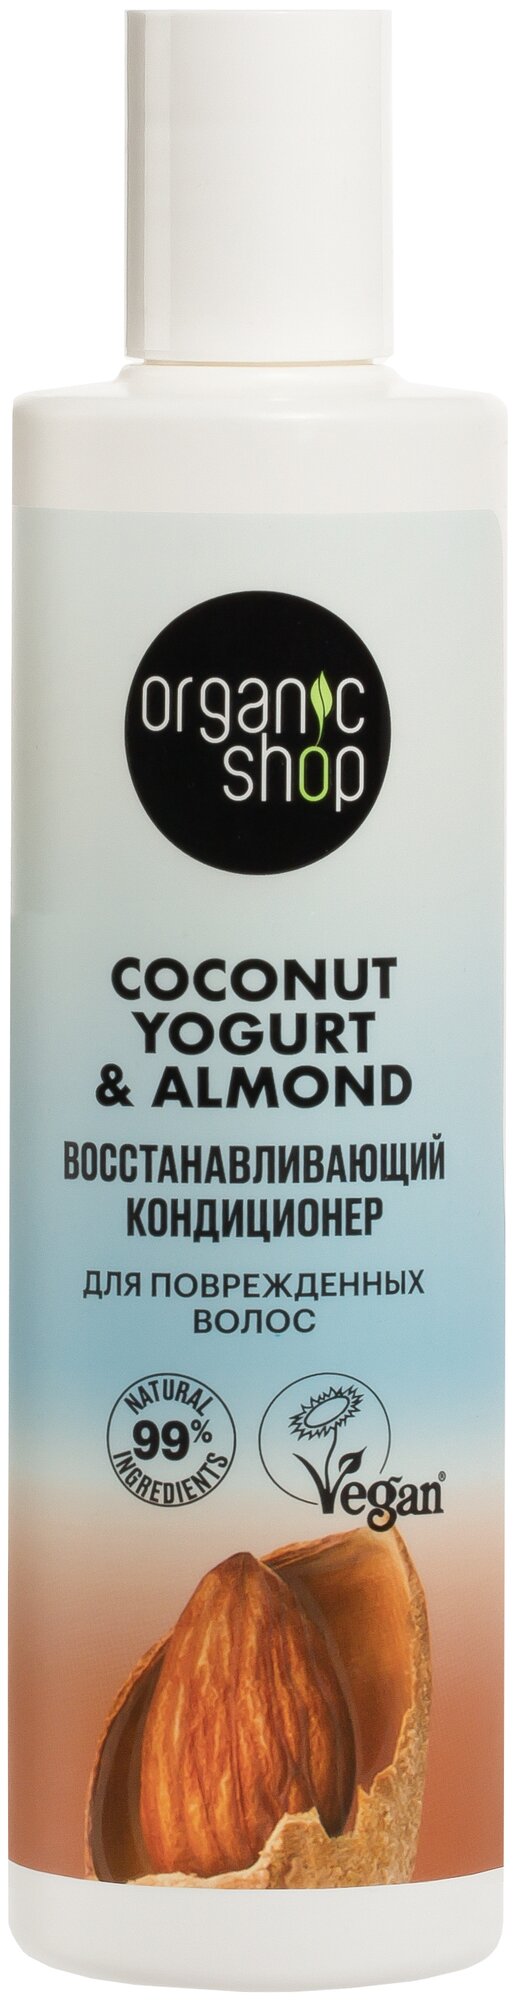 NS "Organic shop" Coconut yogurt Кондиционер для поврежд. волос "Восстанавливающий", 280мл